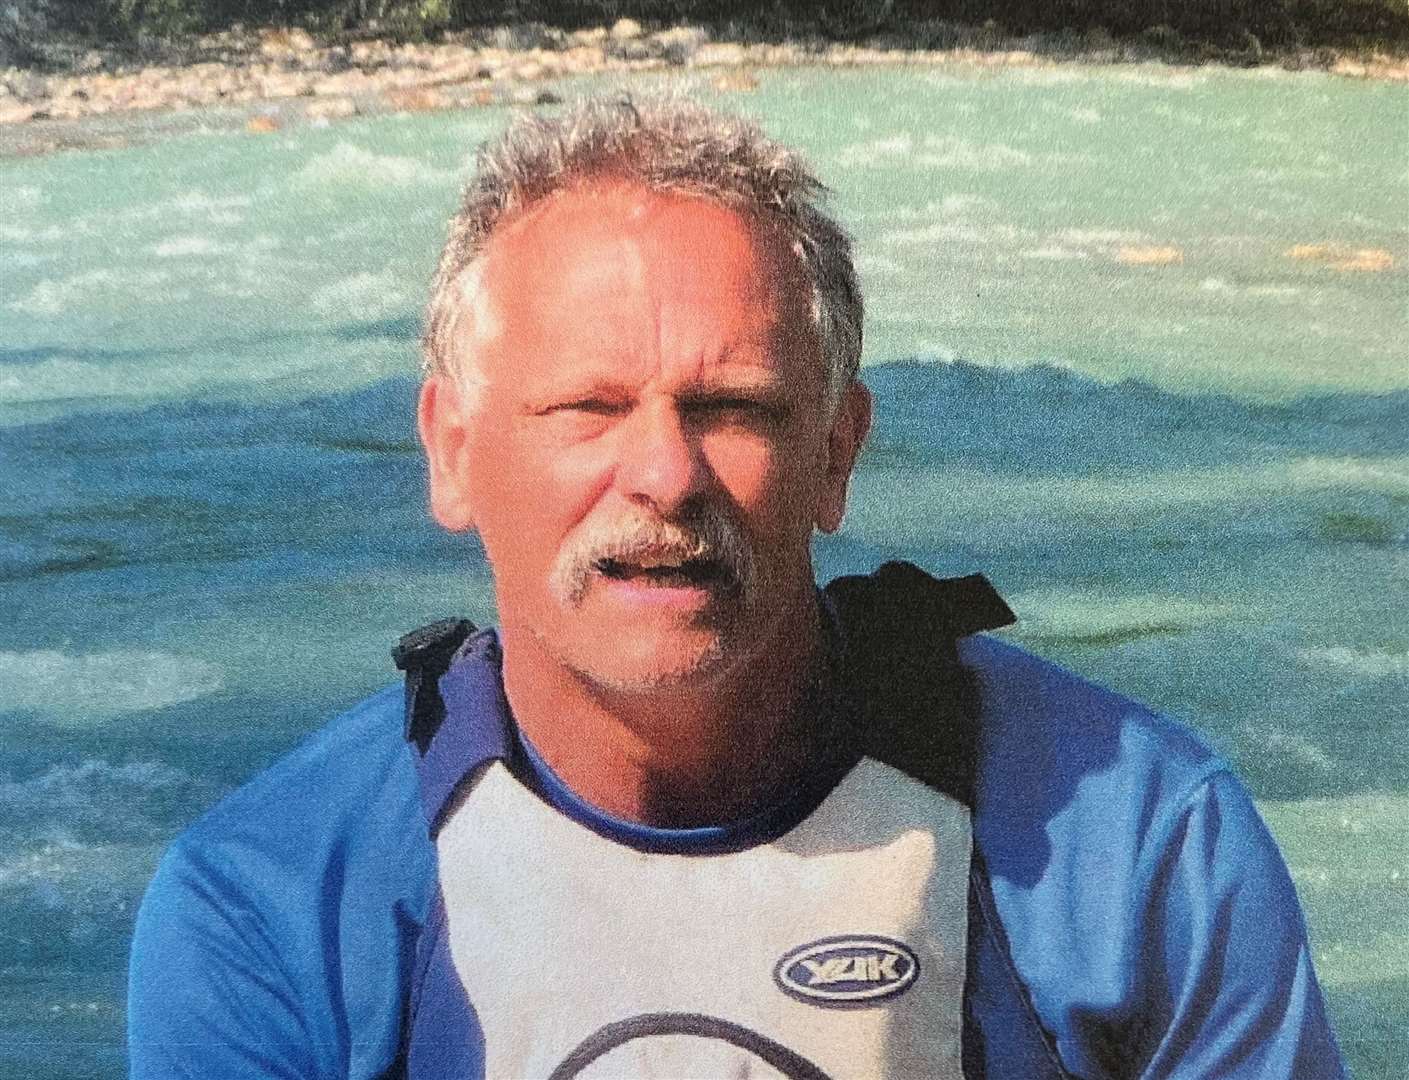 Author and kayakist Bill Taylor